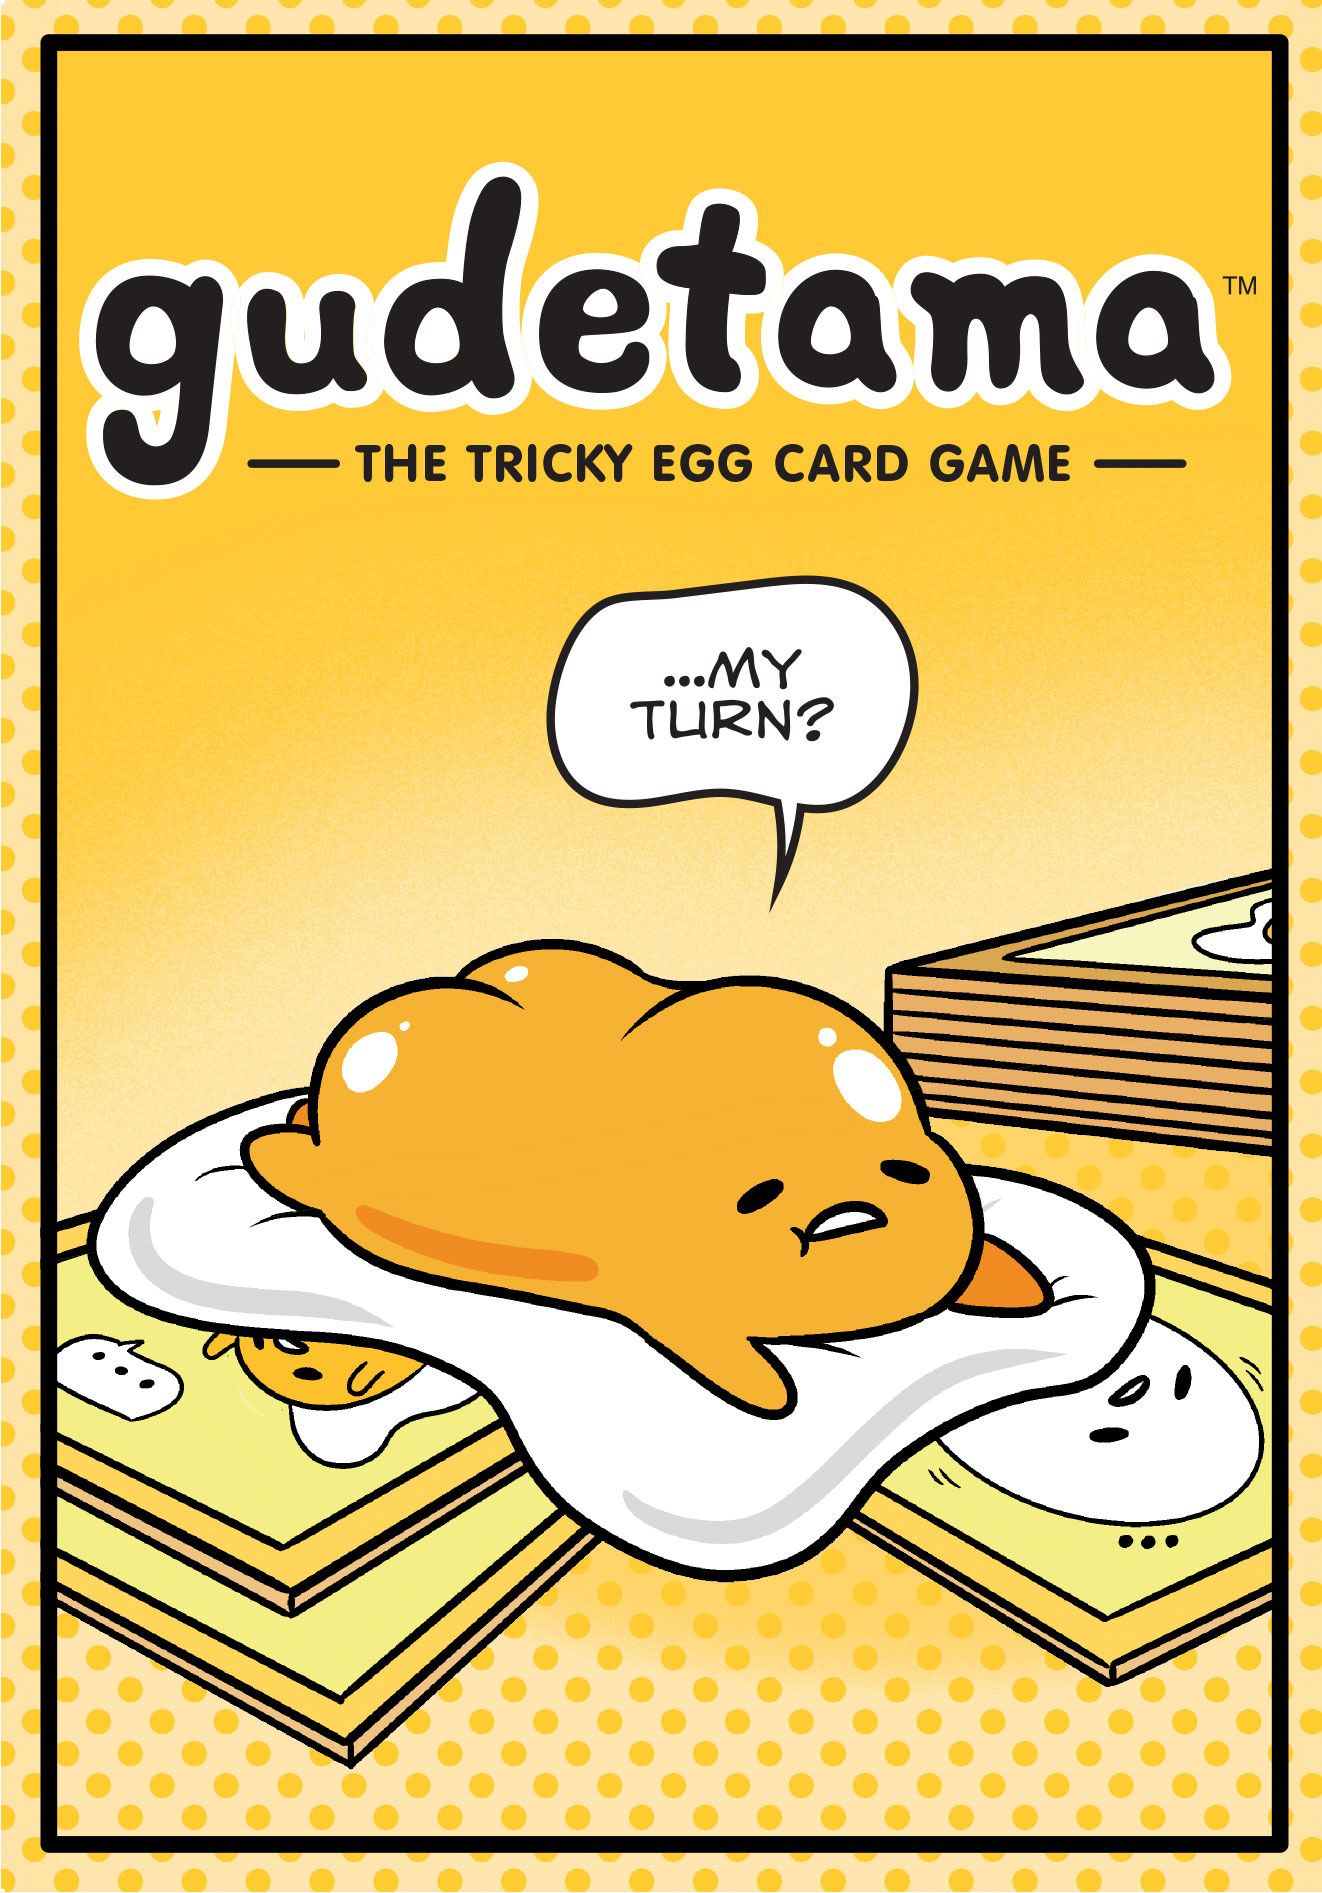 GUDETAMA TRICKY EGG CARD G AME